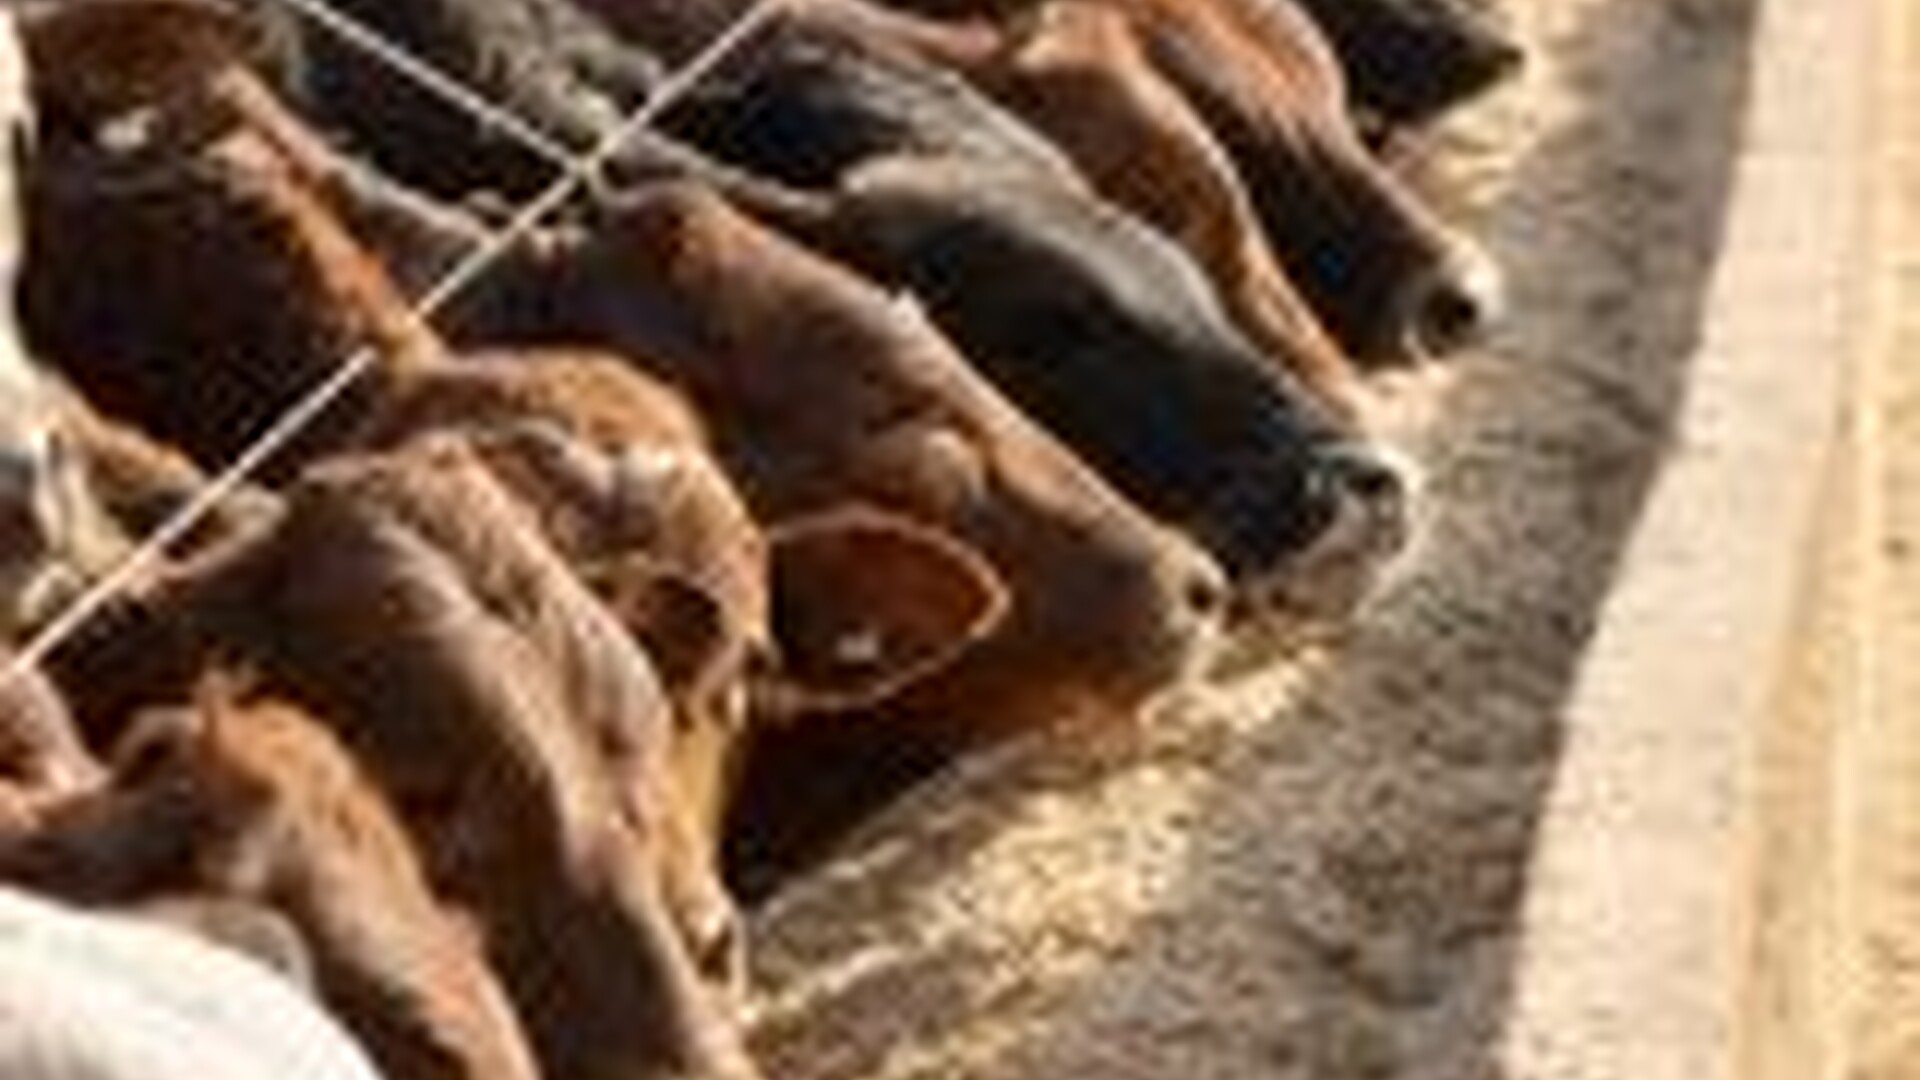 R-CALF USA Will Keep Pushing on the Farm Bill